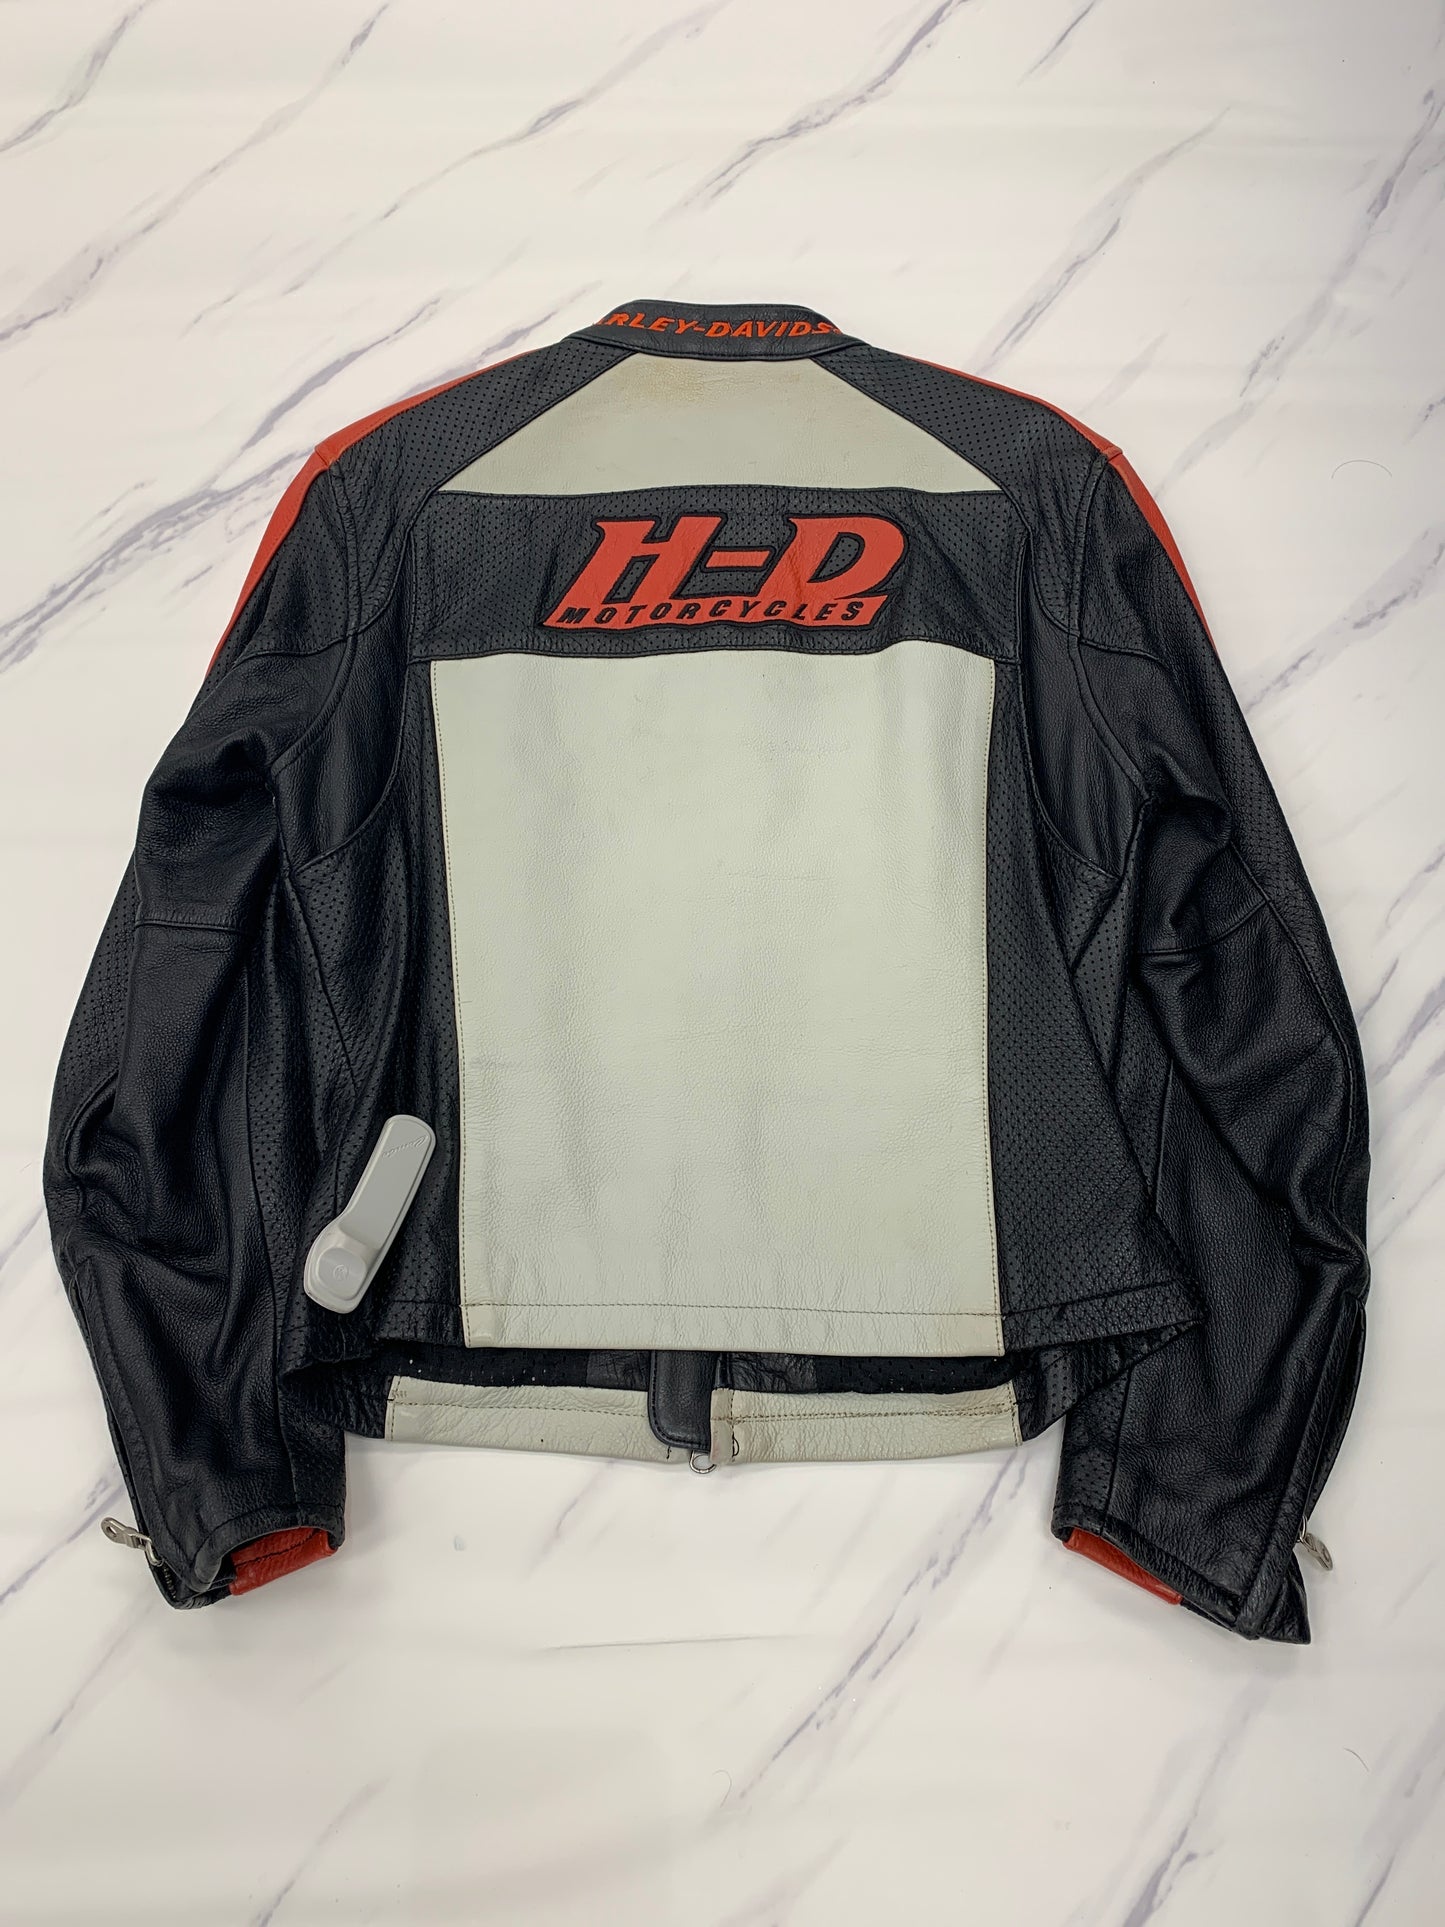 Jacket Leather By Harley Davidson  Size: S